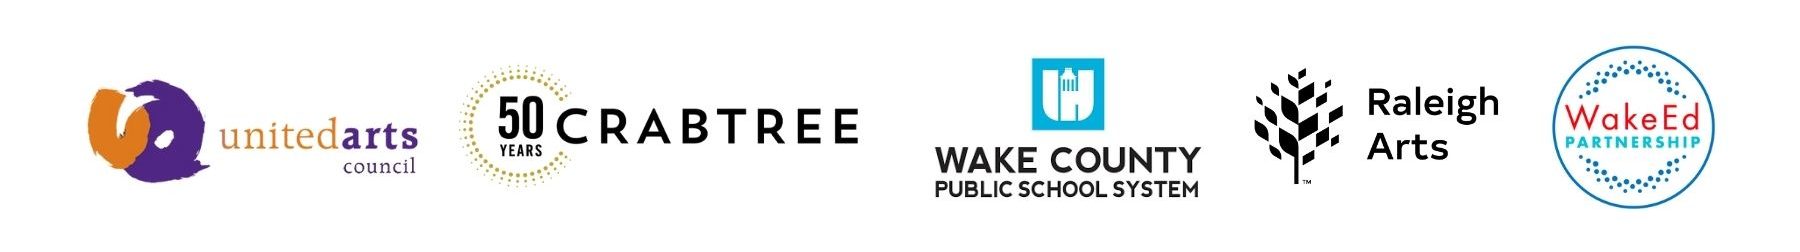 Sponsor Logos: United Arts, Crabtree, WCPSS, Raleigh Arts, Wake Ed Partnership